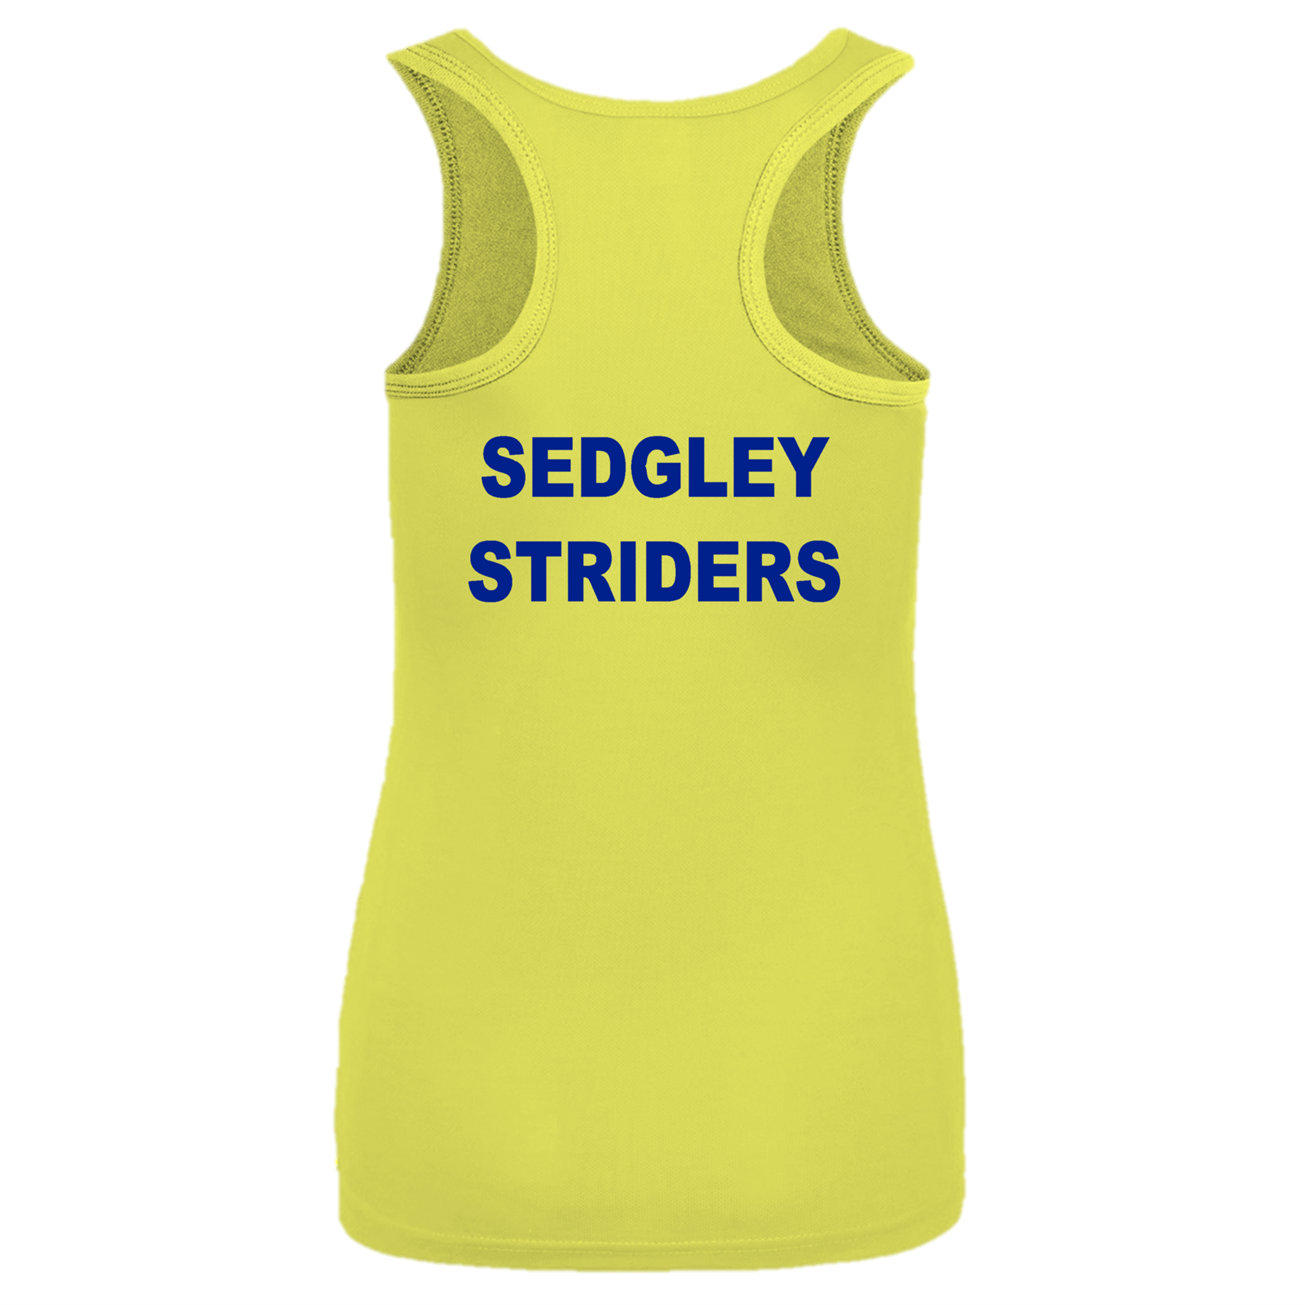 Sedgley Striders - Women's Racerback Vest [JC015]